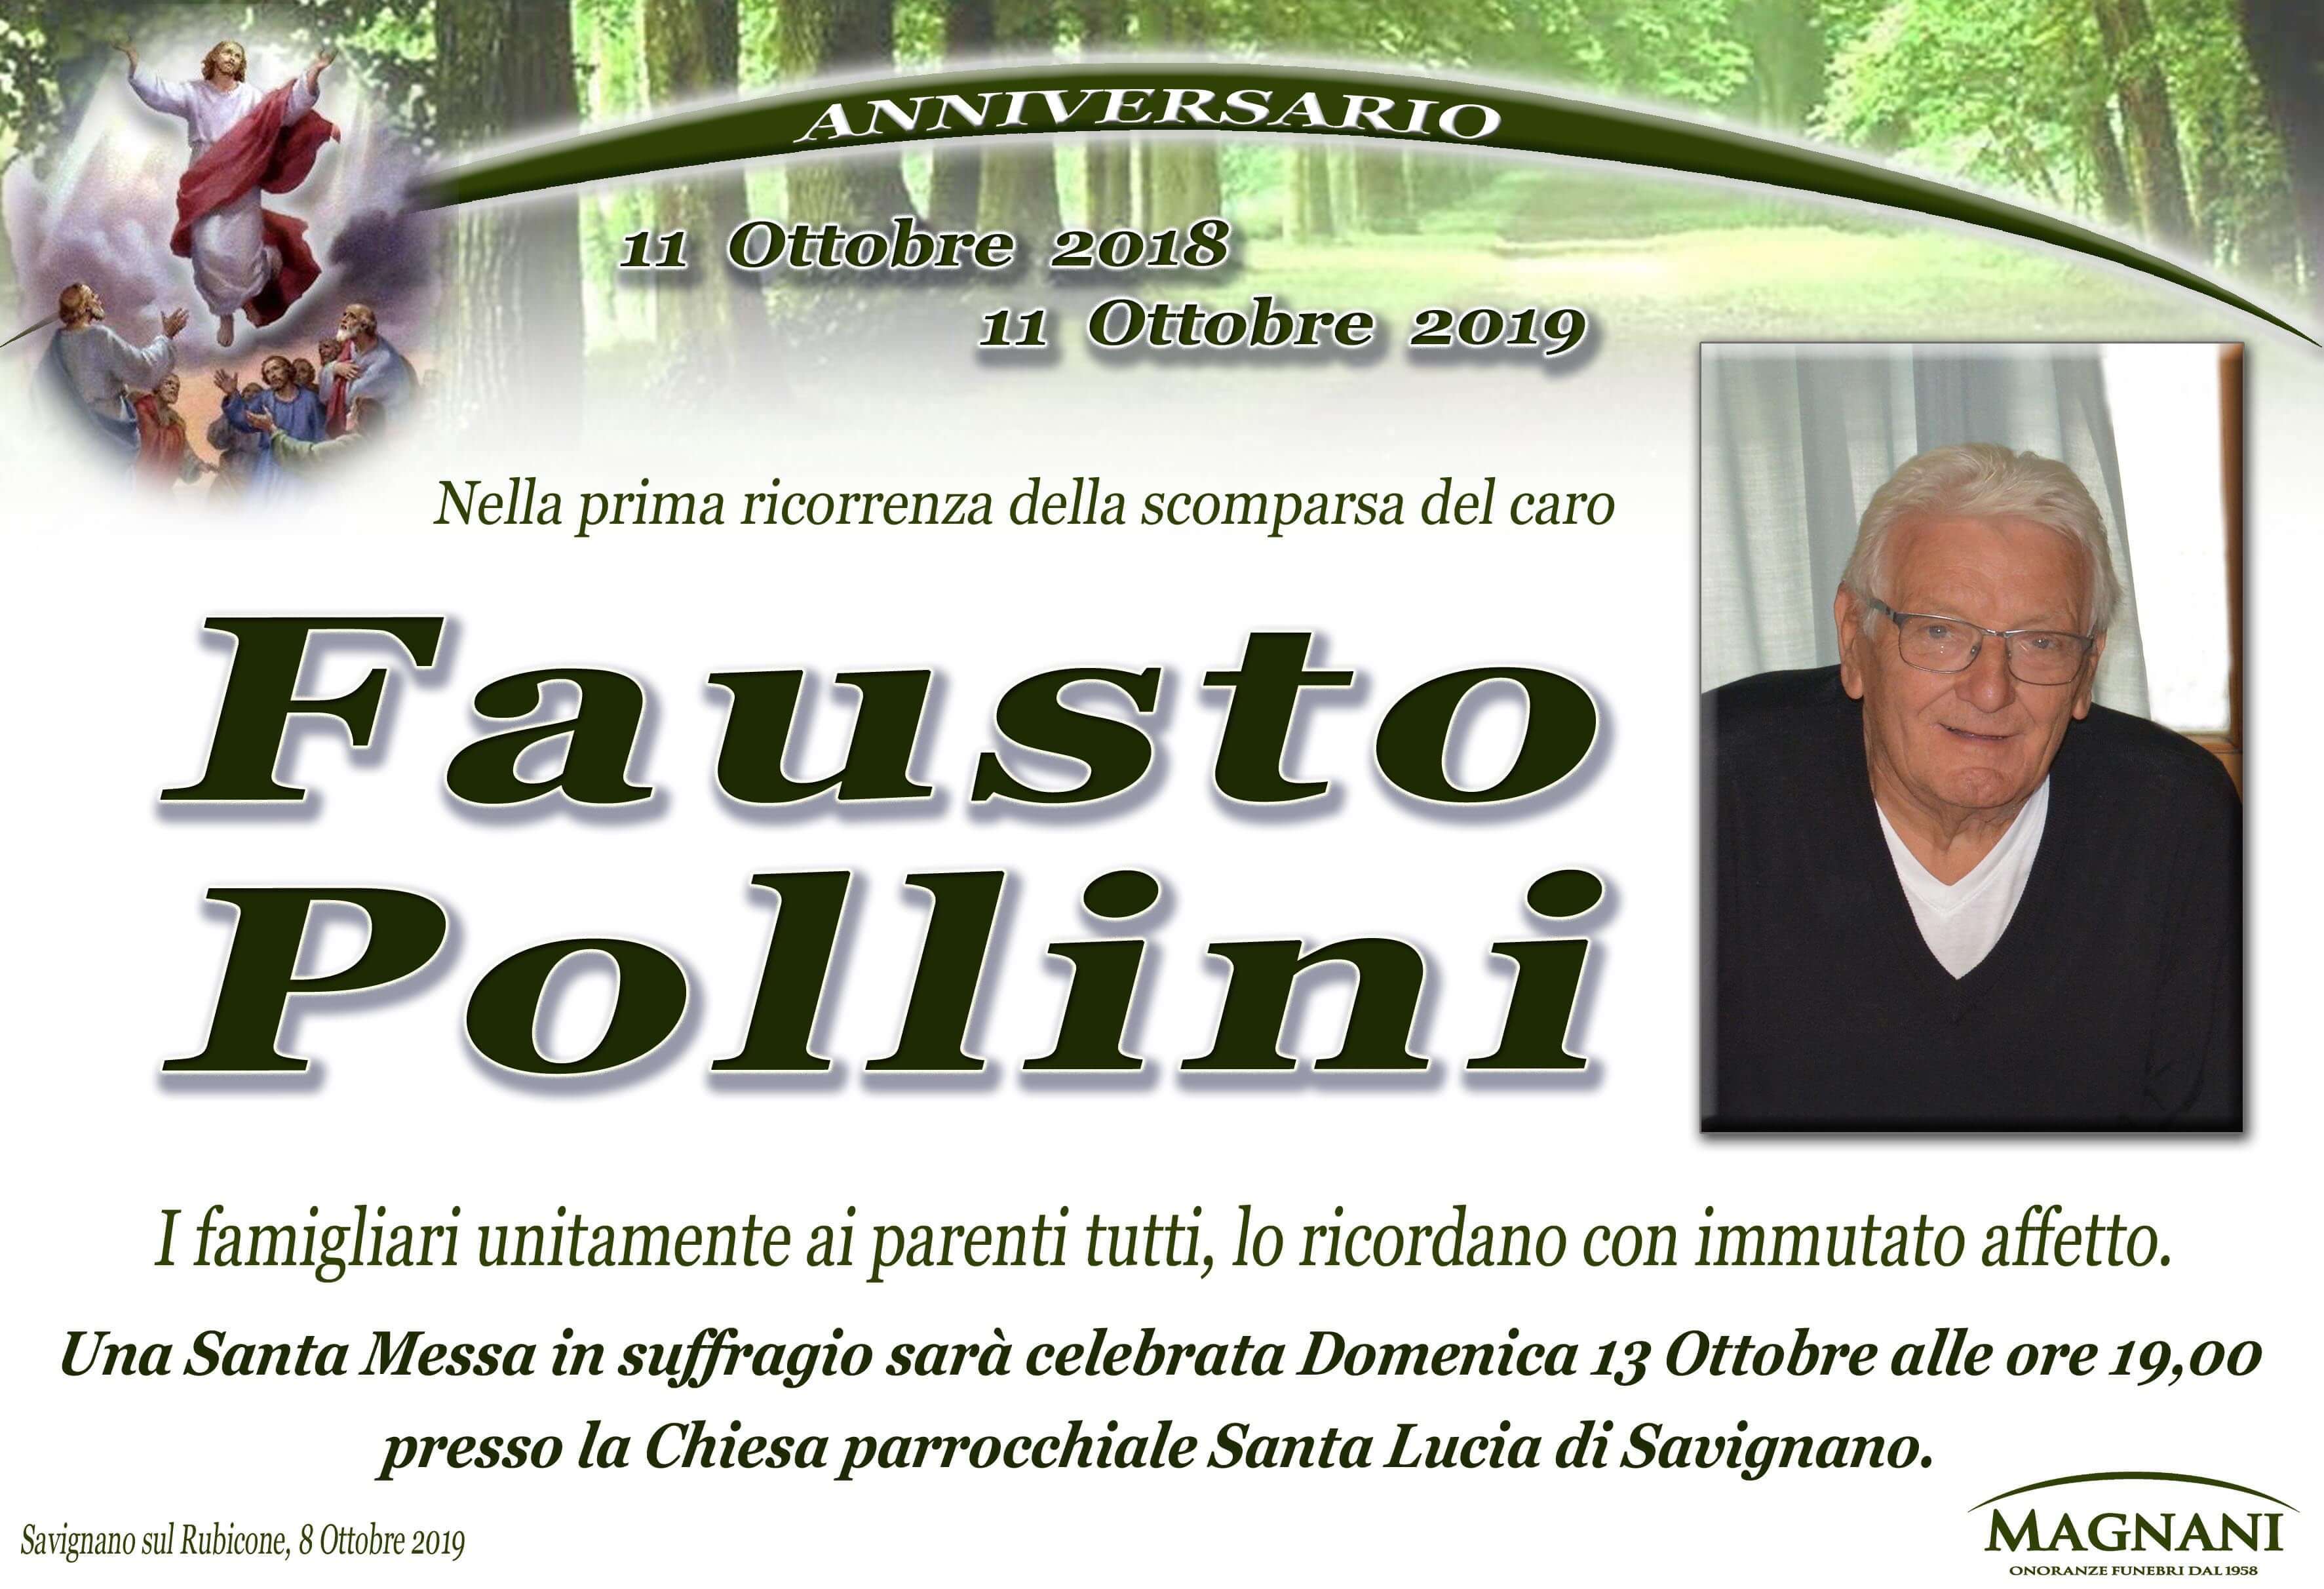 Fausto Pollini